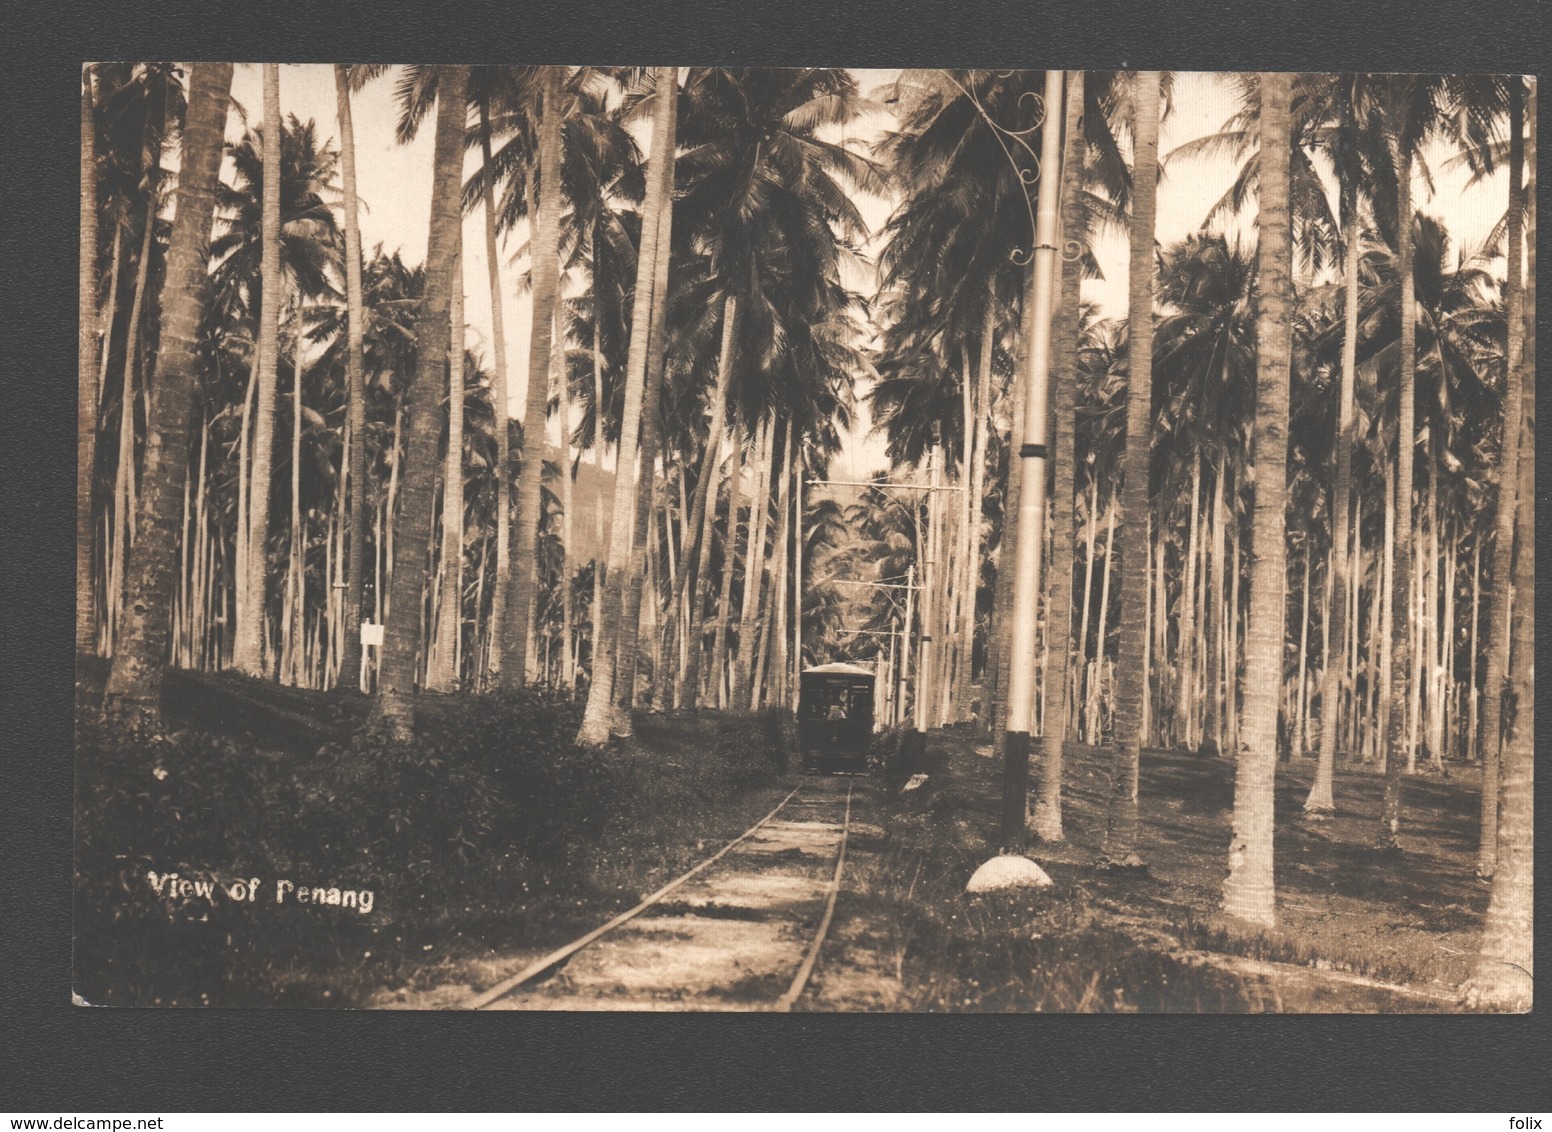 Penang / Pulau Pinang - View Of Penang - Photo Card - Train / Trein / Zug - Chemin De Fer / Eisenbahn / Railway - Malesia